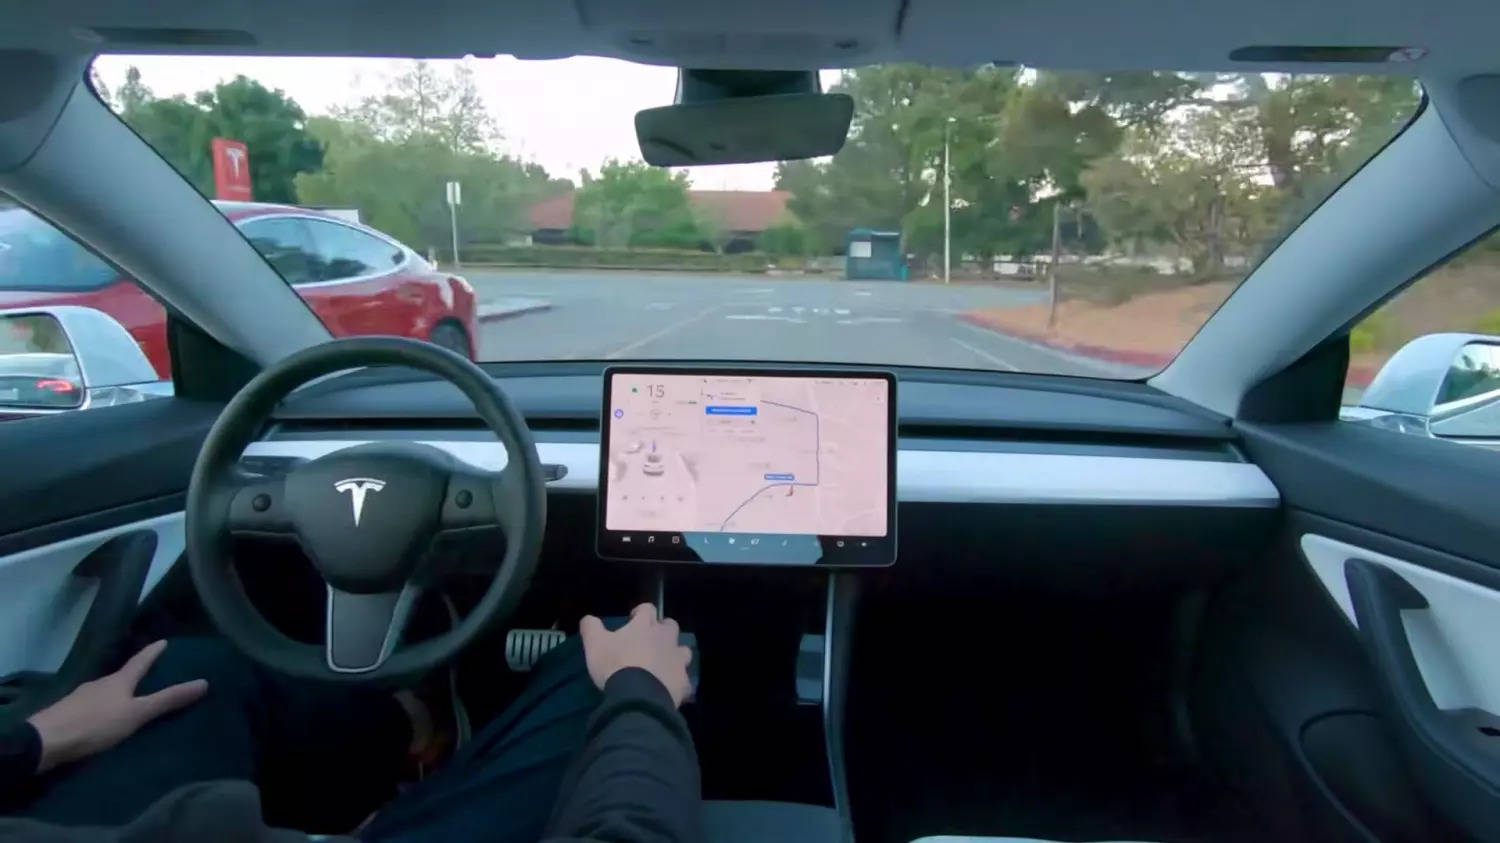  Tesla's Autopilot has already been involved in around a dozen crashes the world over.